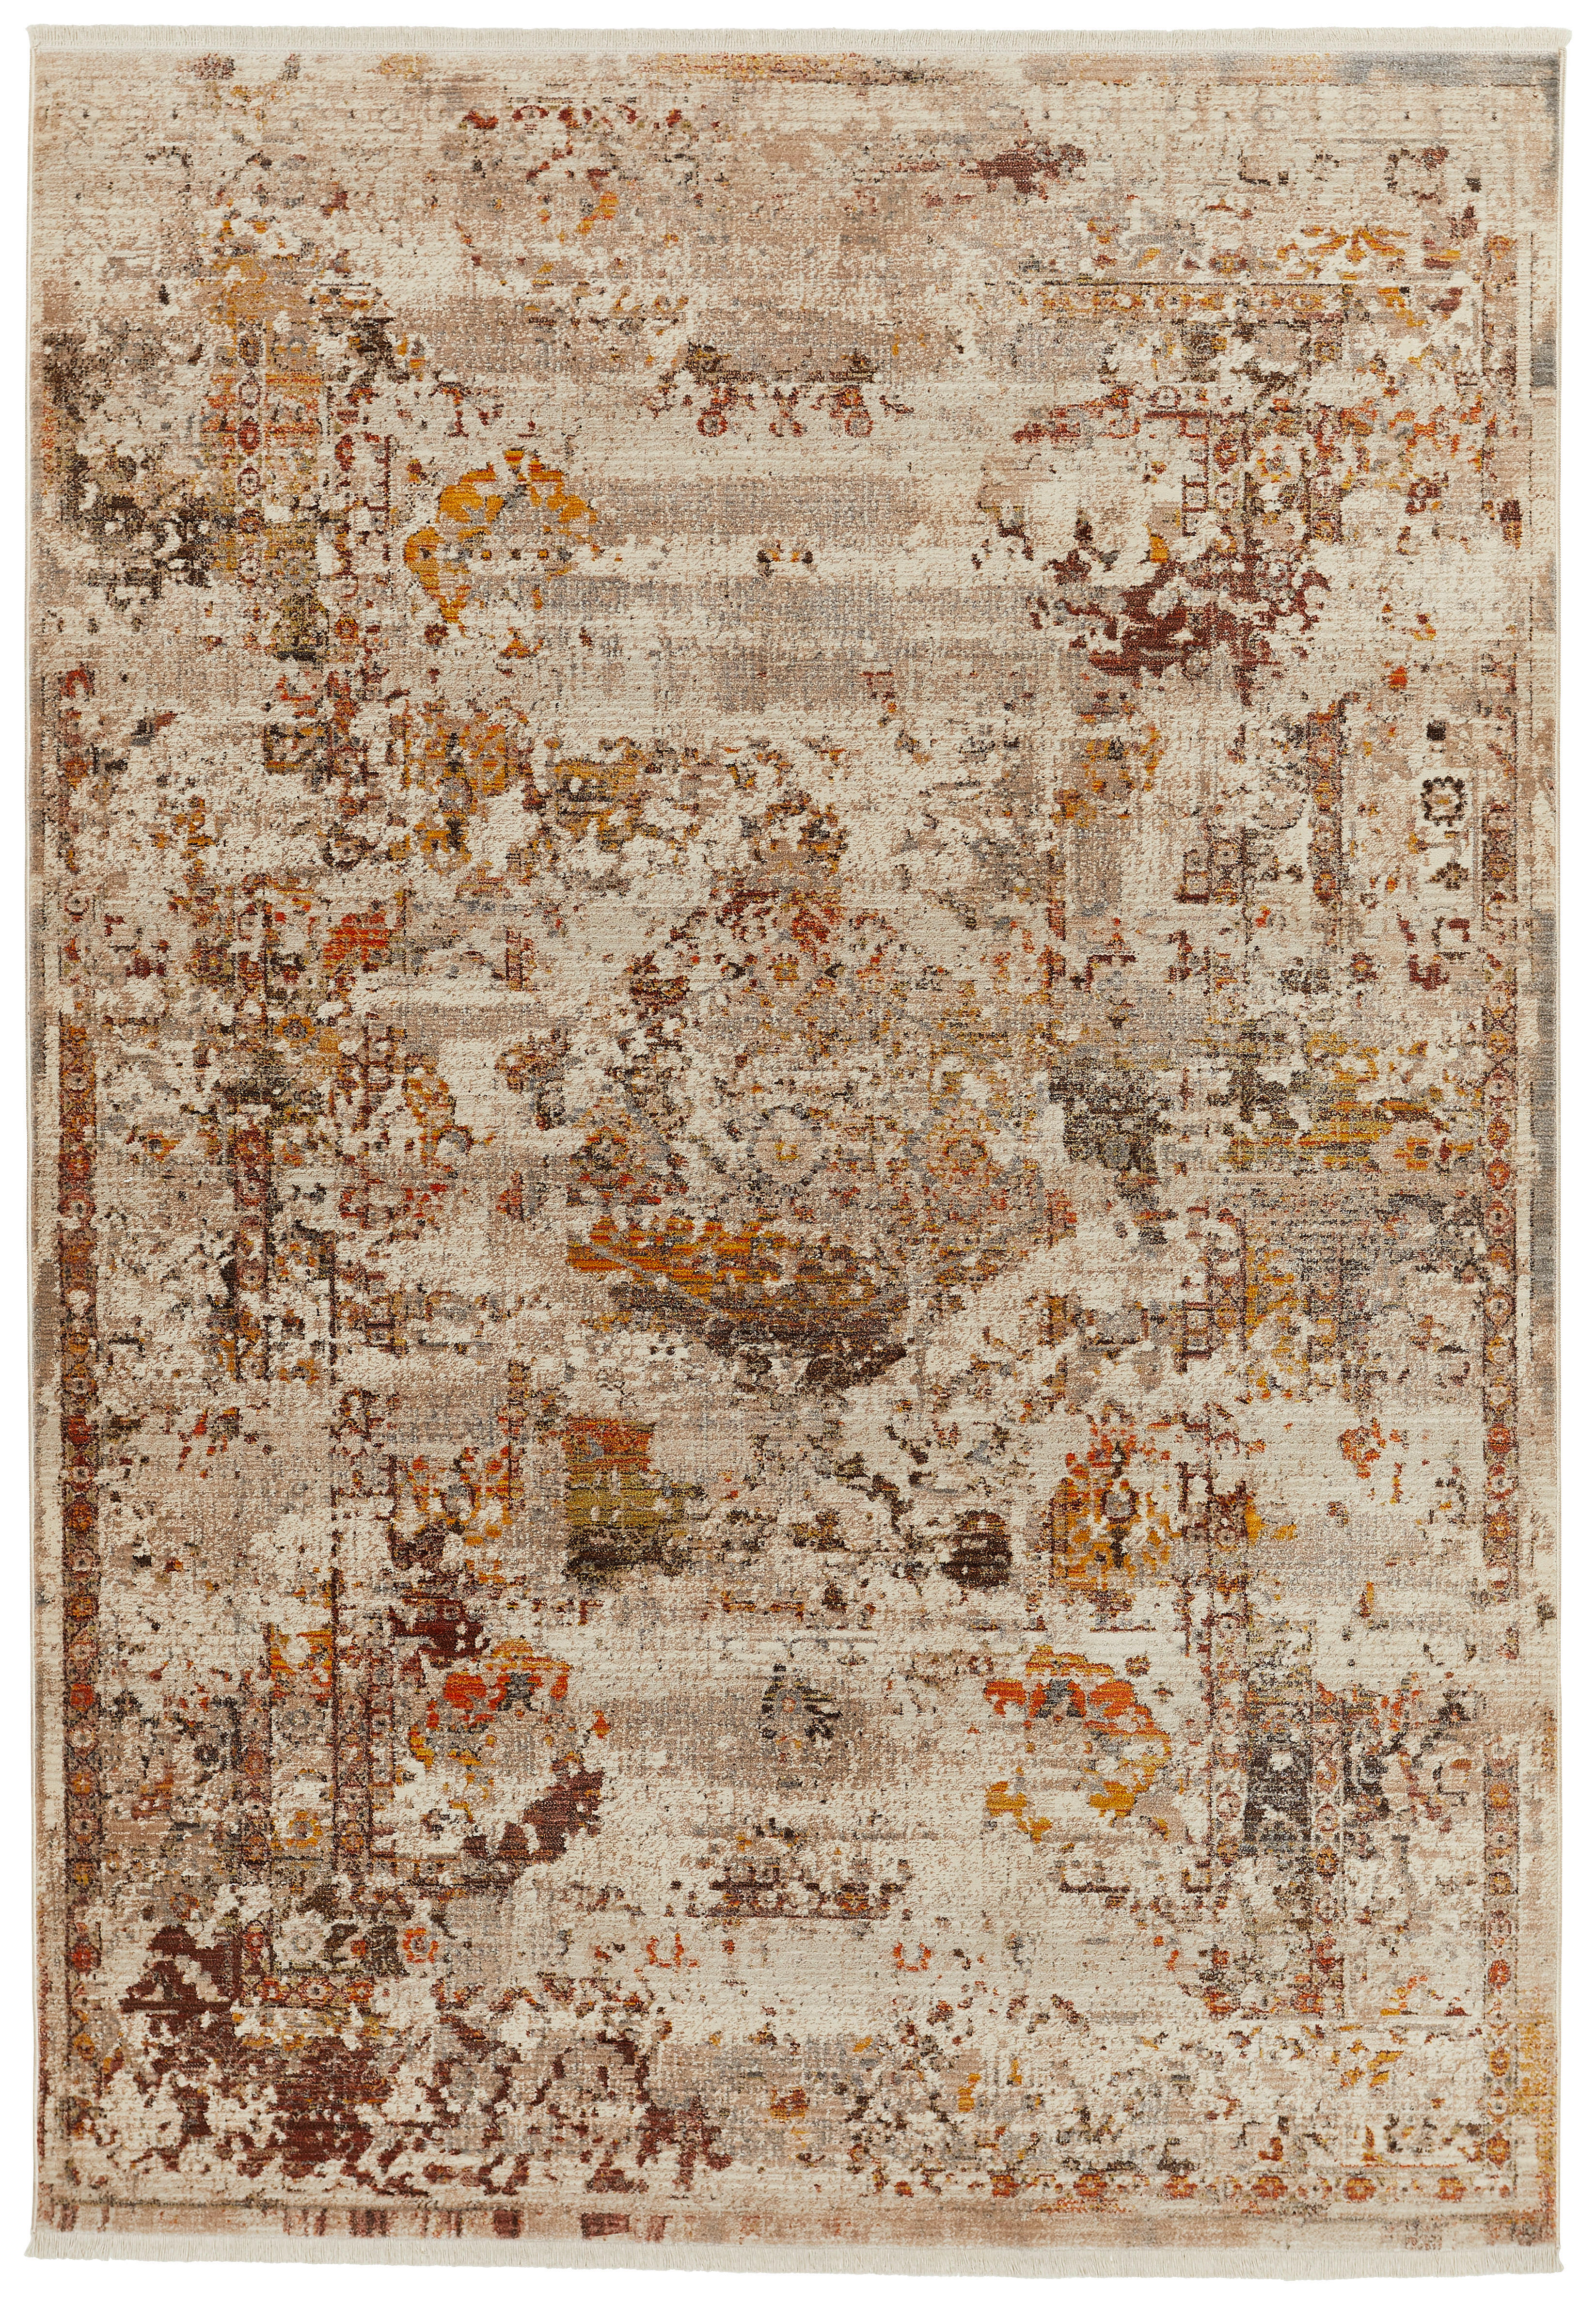 VINTAGE-TEPPICH Samarkand  160/235 cm  Multicolor   - Multicolor, LIFESTYLE, Textil (160/235cm) - Novel